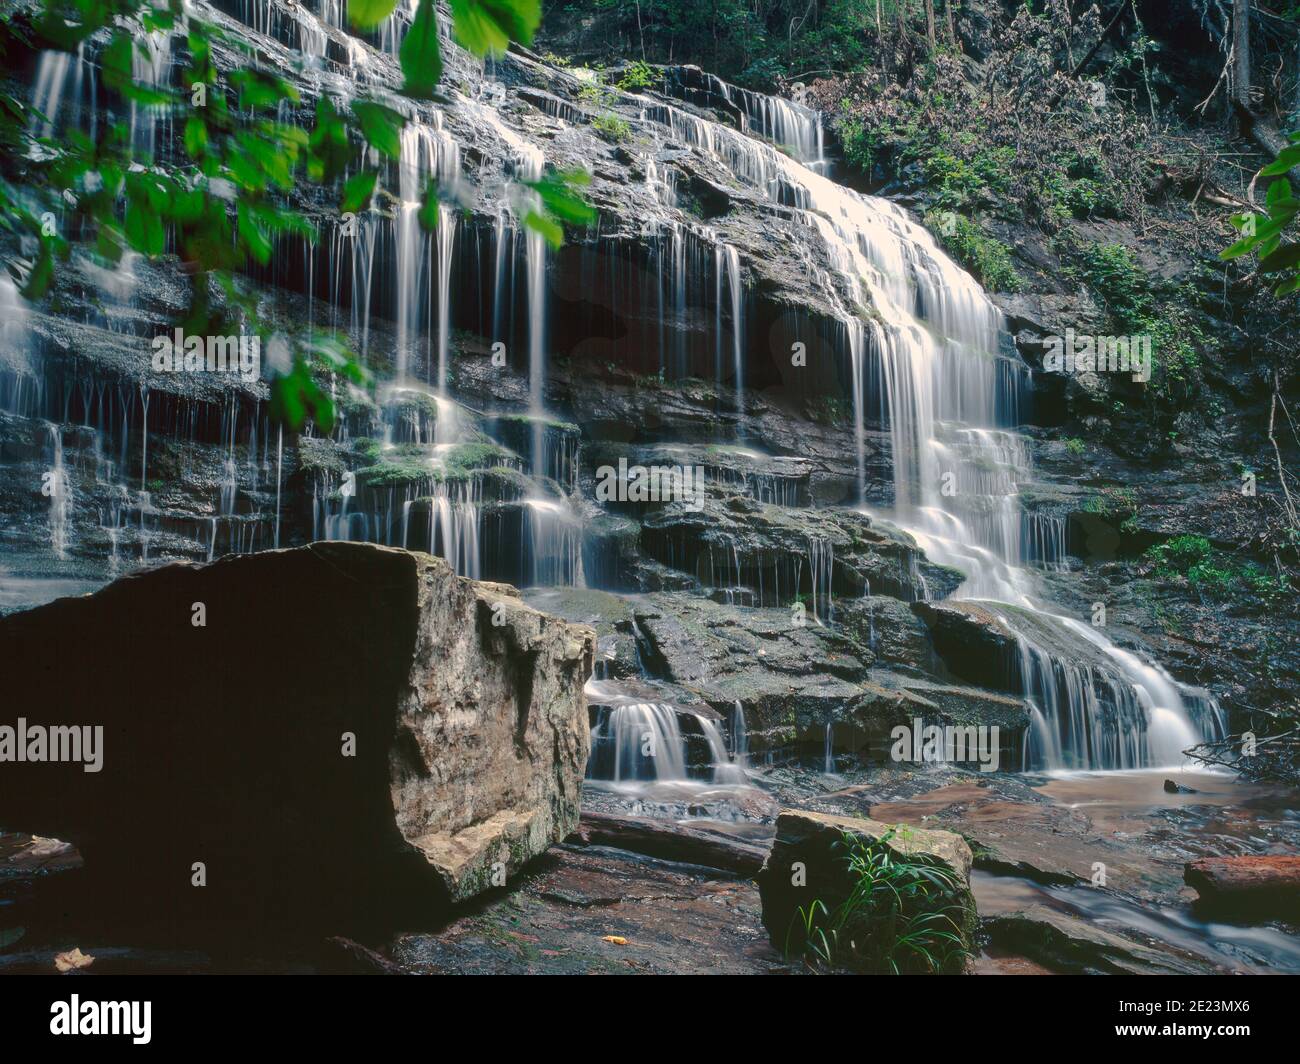 Lower Proxy Falls, auch Cove Falls und Station Cove Falls genannt, im Sumter National Forest im Bundesstaat South Carolina. Fotografiert im Frühsommer w Stockfoto